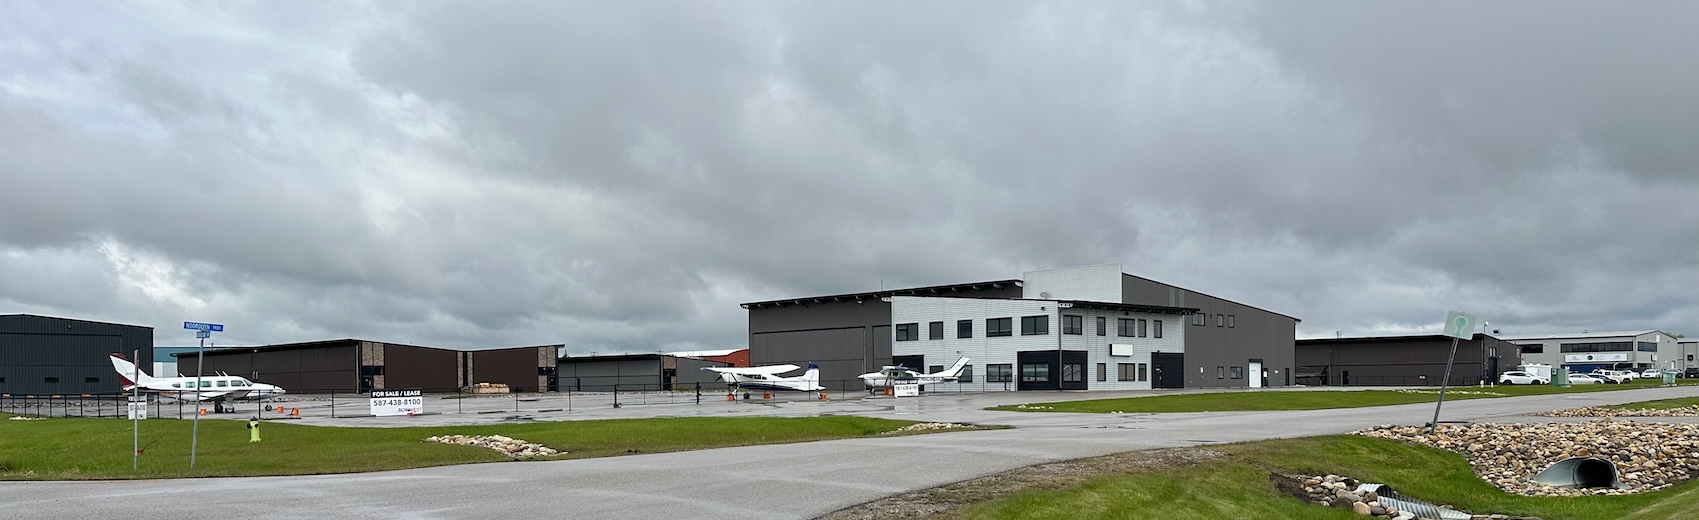 The MRU hangar housing airplanes; ready for flight.